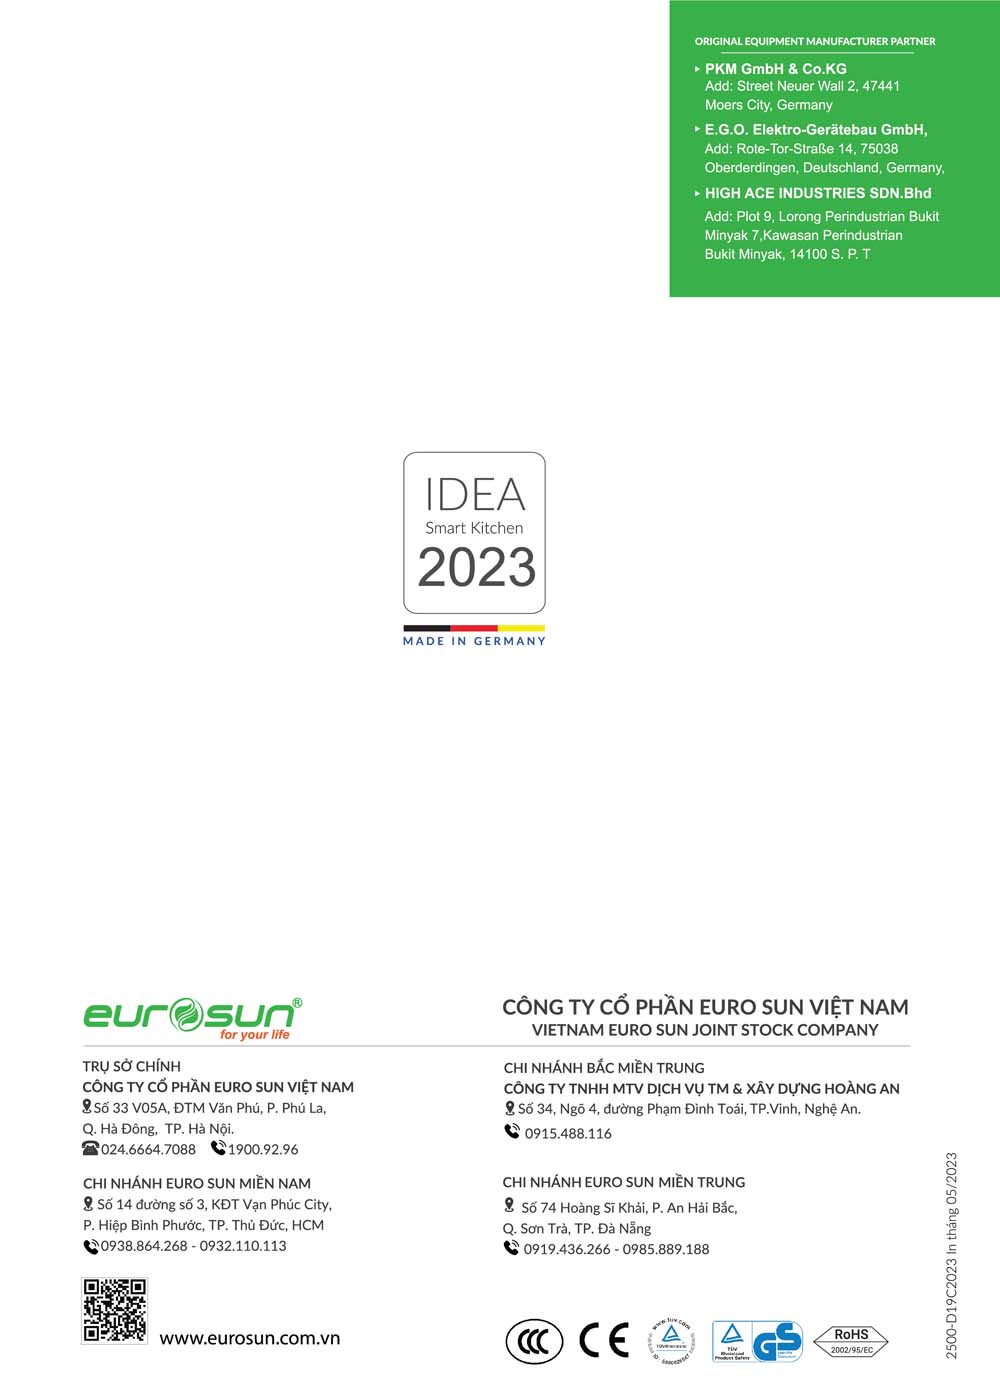 Catalogue EUROSUN 2023 – Bang gia thiet bi nha bep 100